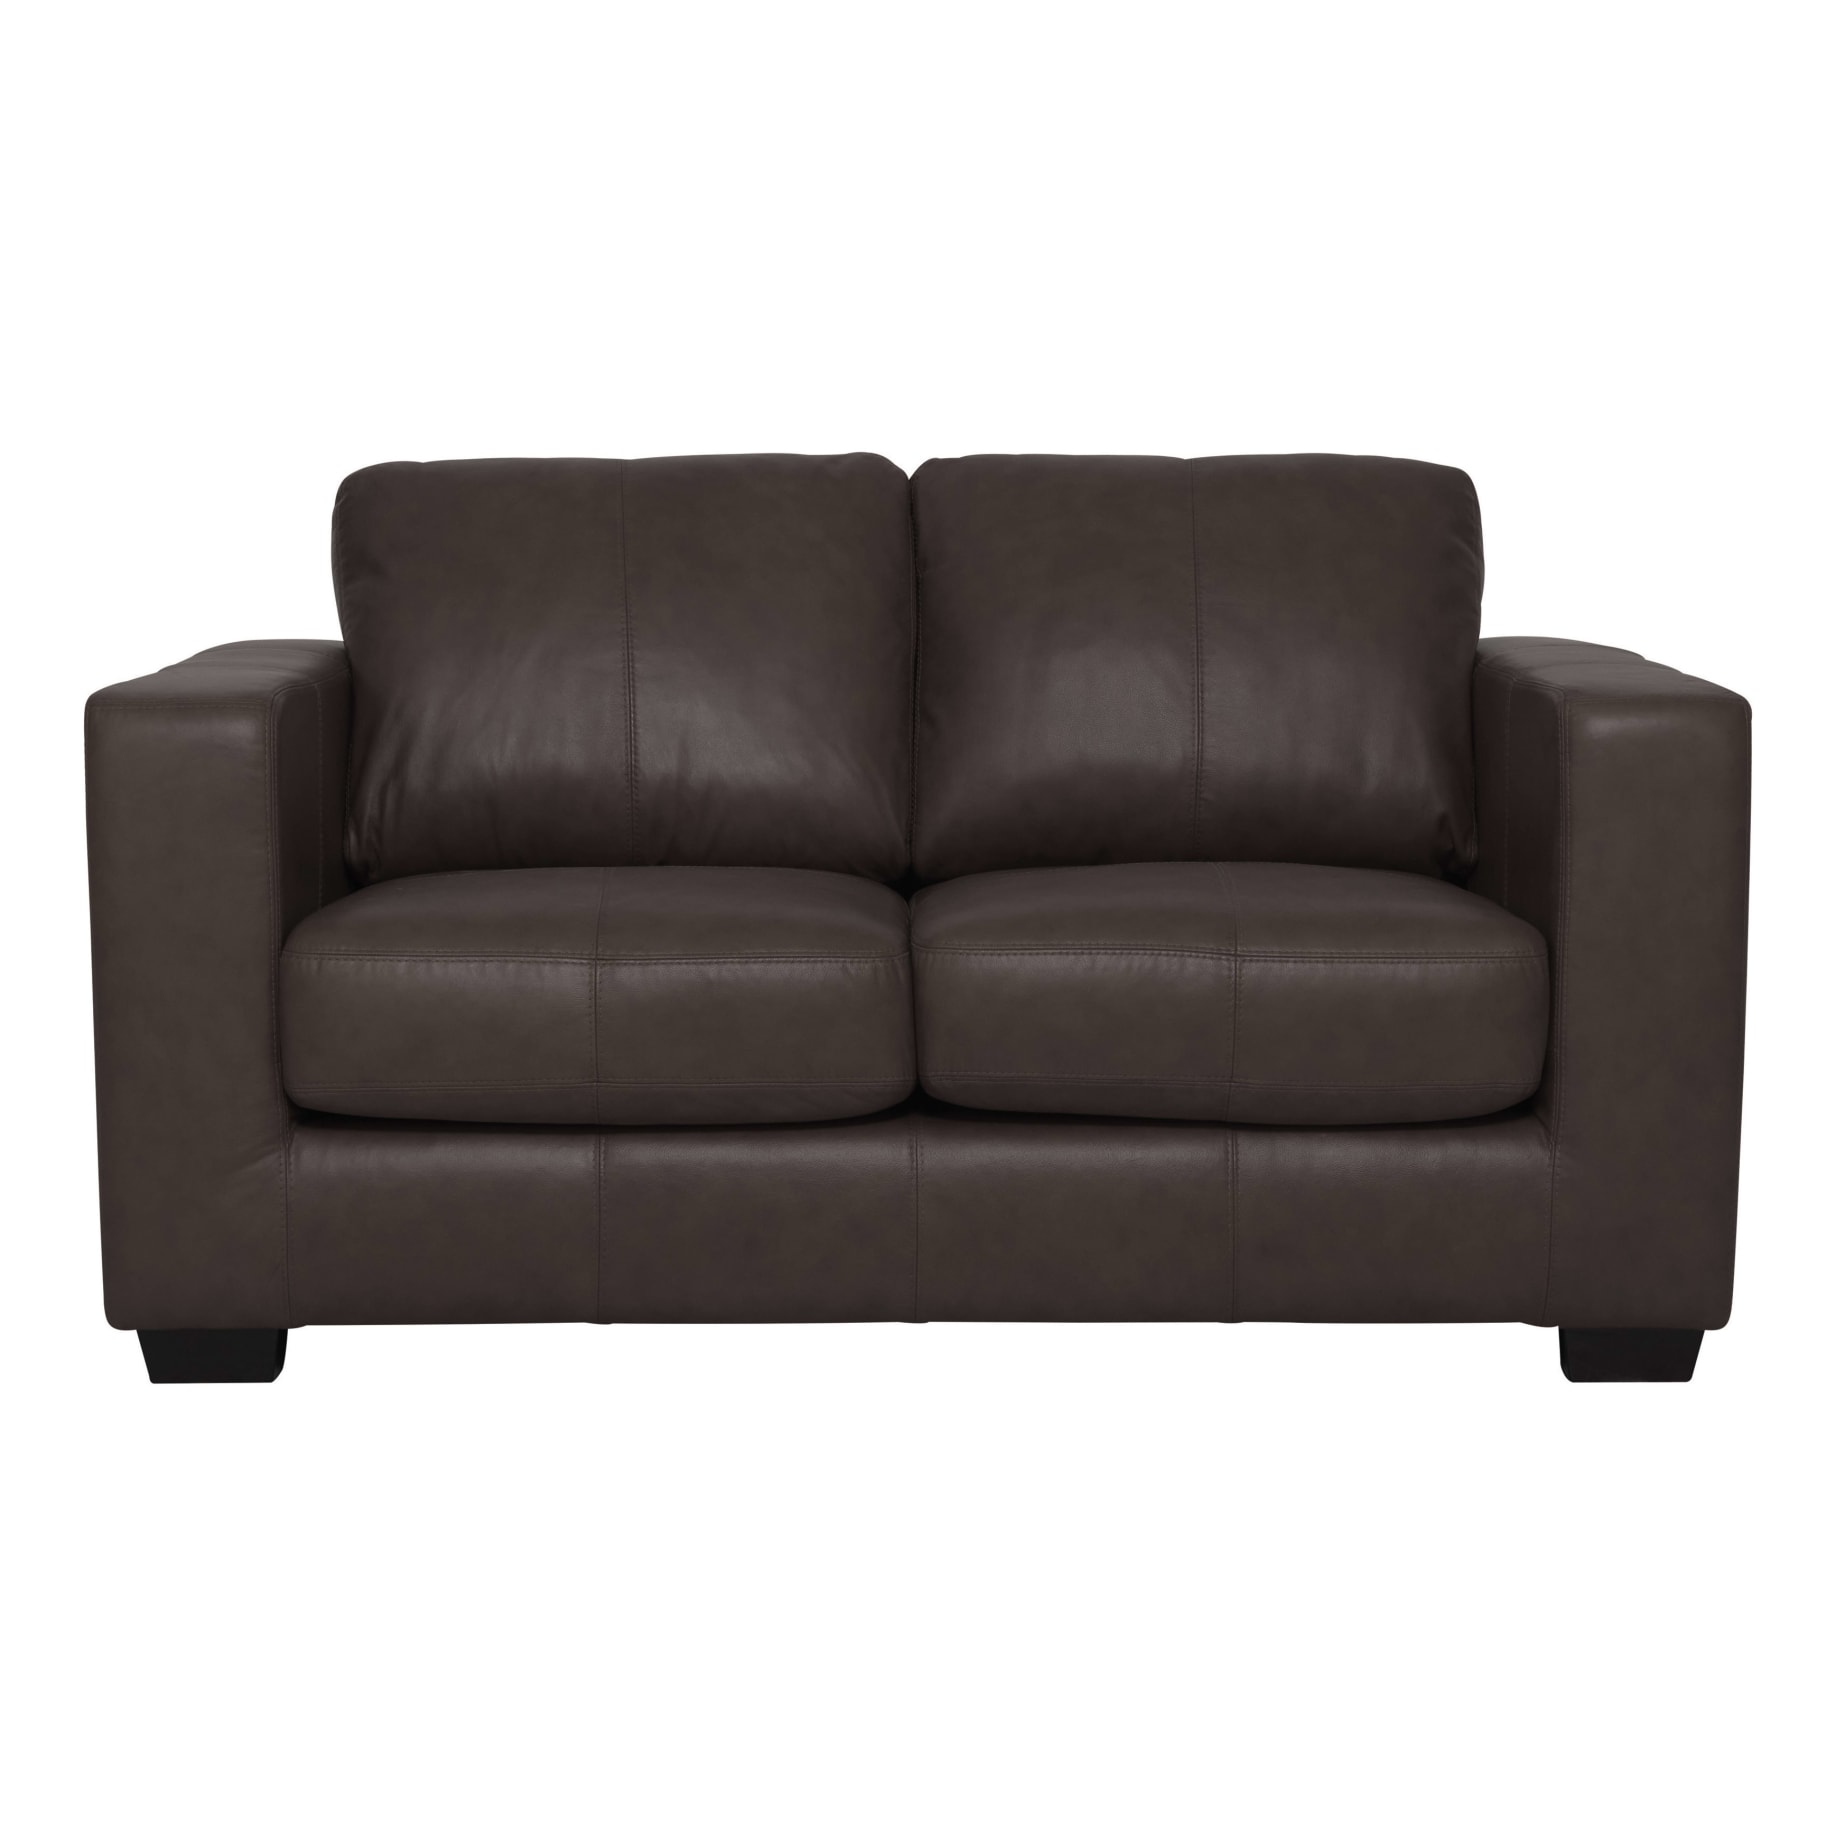 Gordon 2 Seater Sofa in Aniline Leather Dark Chocolate